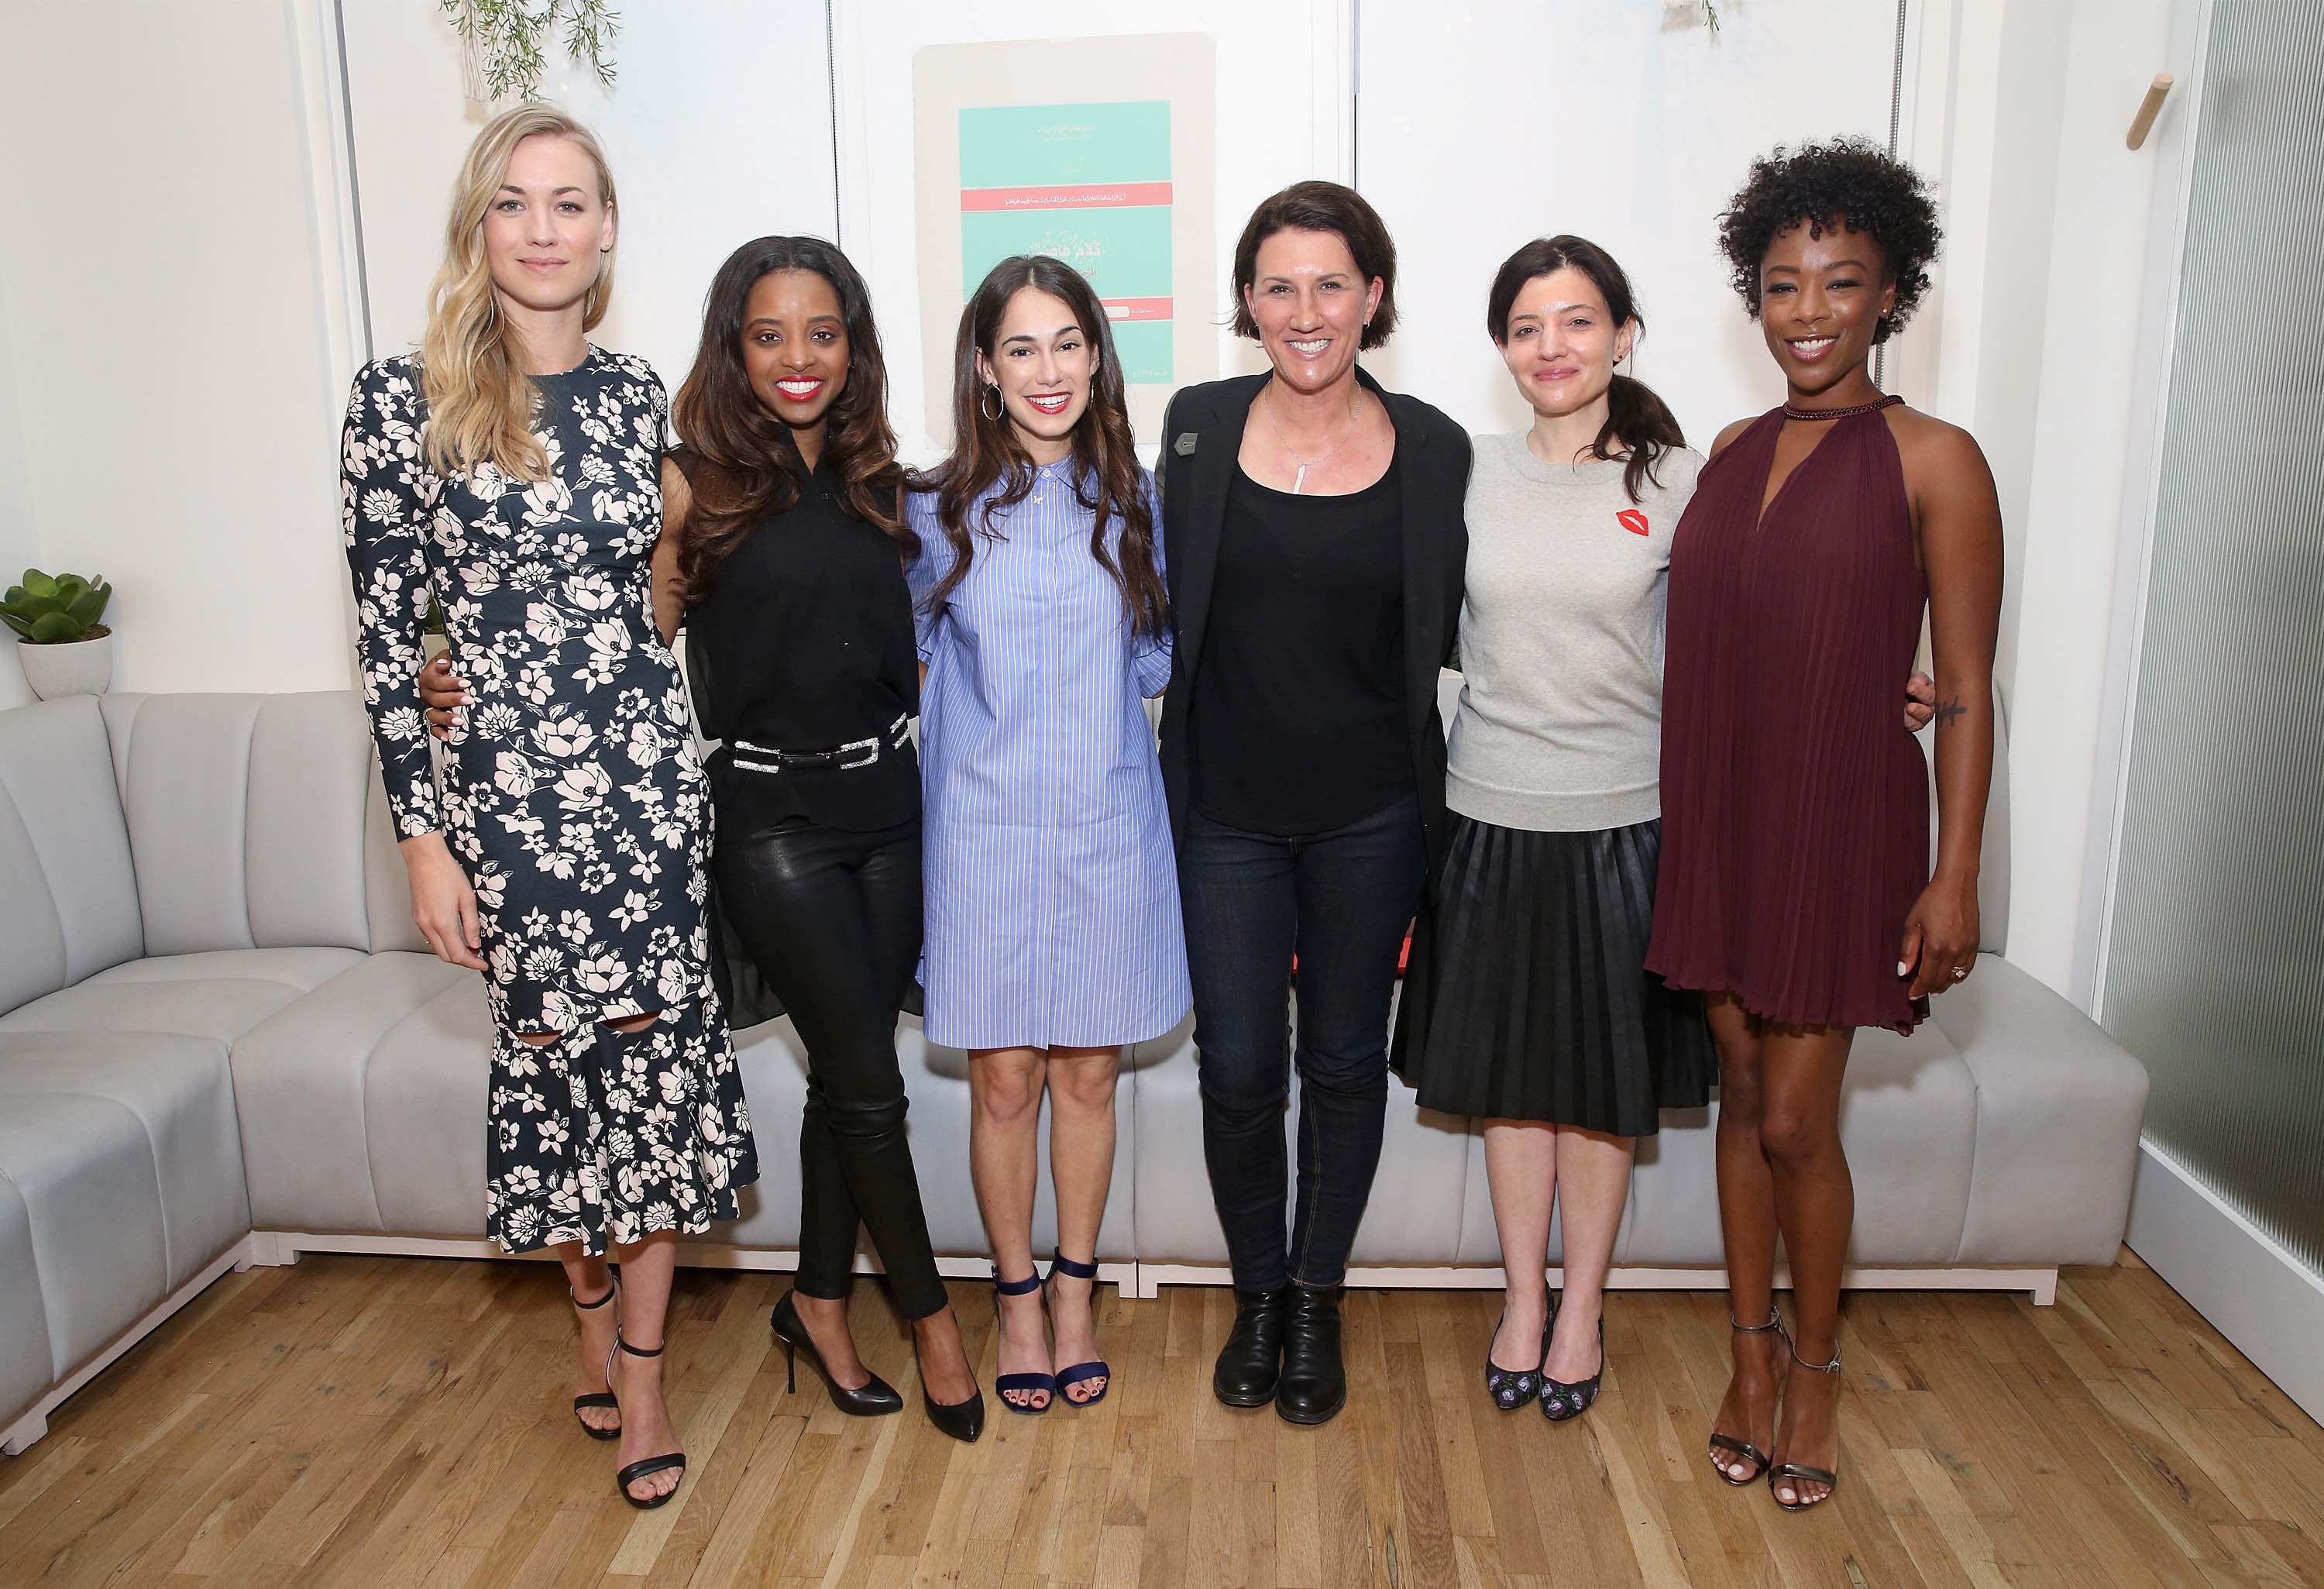 Tamika Mallory attends Hulu Presents A VIP Screening Of Original Series “The Handmaid’s Tale”